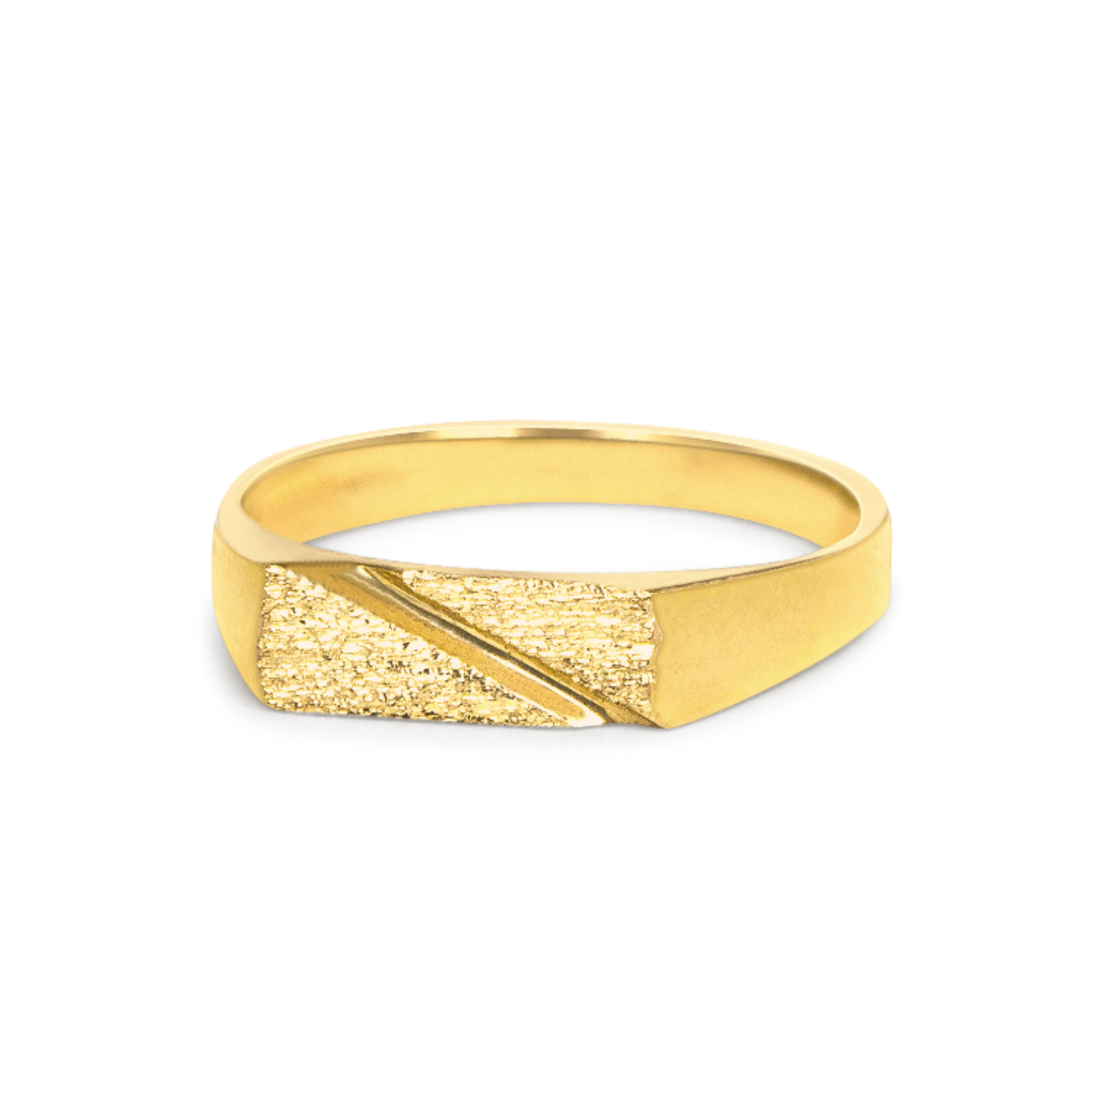 gold bar toronto, gold bar ring toronto, buy gold bar ring canada, gold bar pinky ring